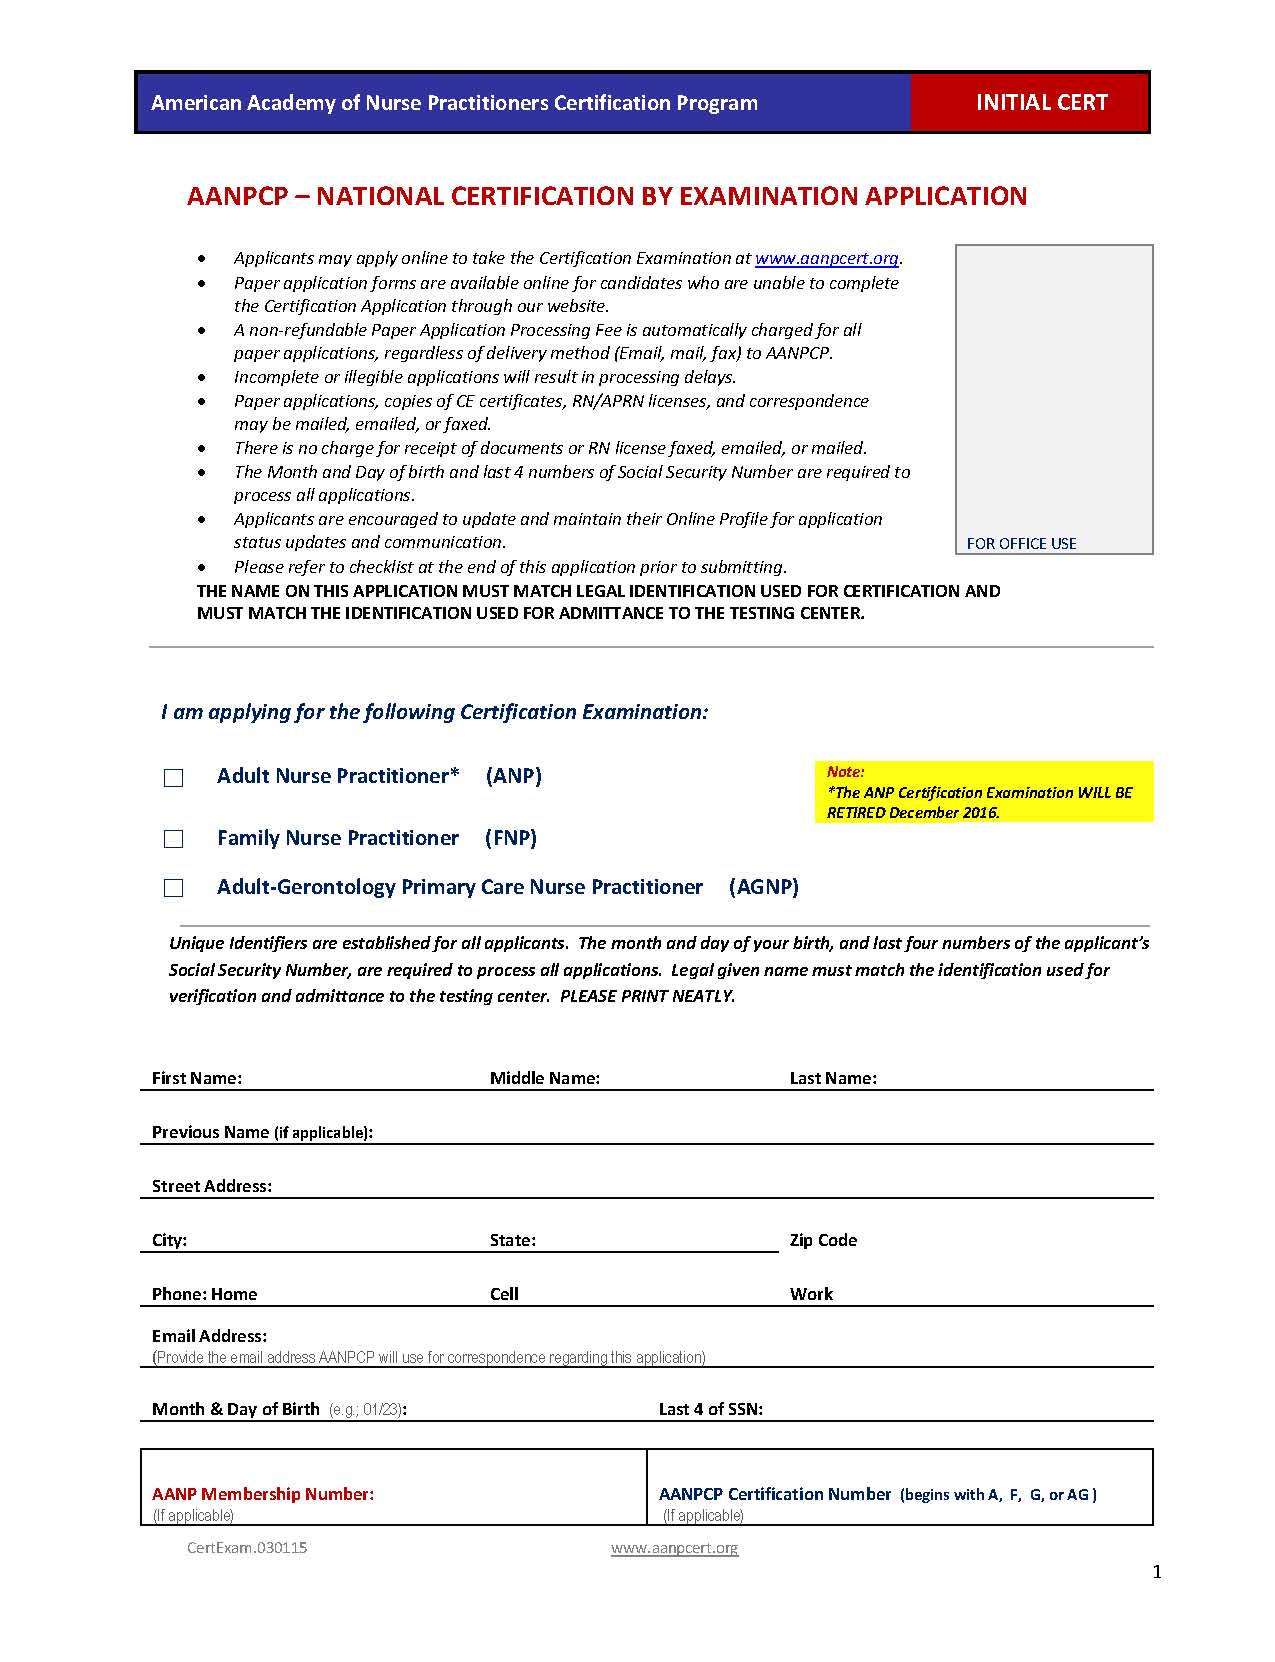 AANP Certification Exam App_Page_1.jpg